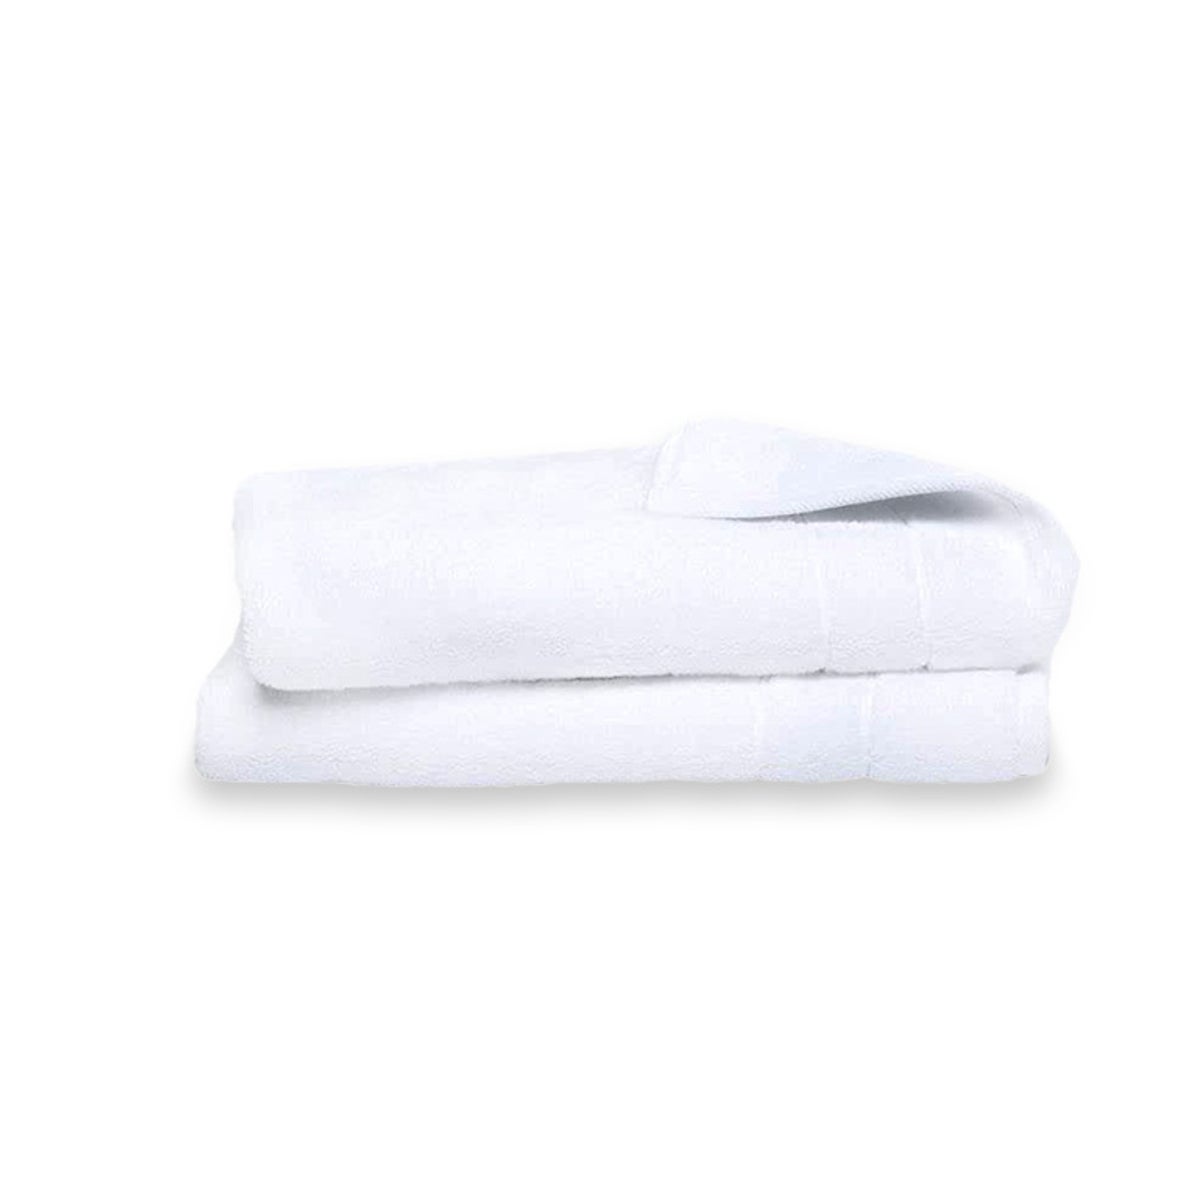 https://www.saveur.com/uploads/2019/09/20/Best-Kitchen-Towels-Option_-Brooklinen-Hand-Towels.jpg?auto=webp